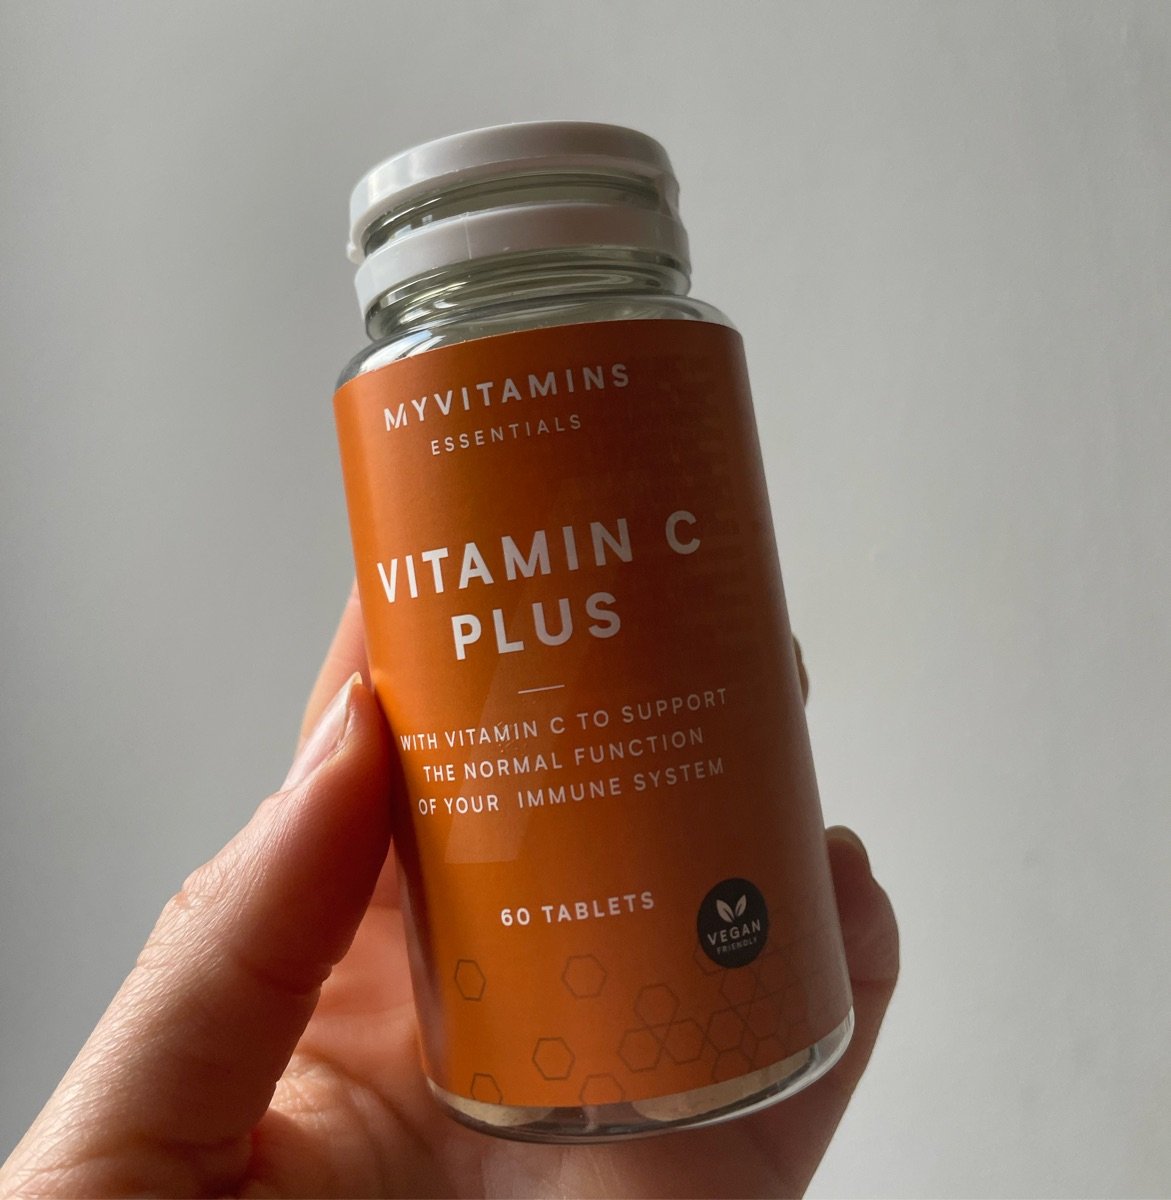 Myvitamins vitamin C plus Review | abillion